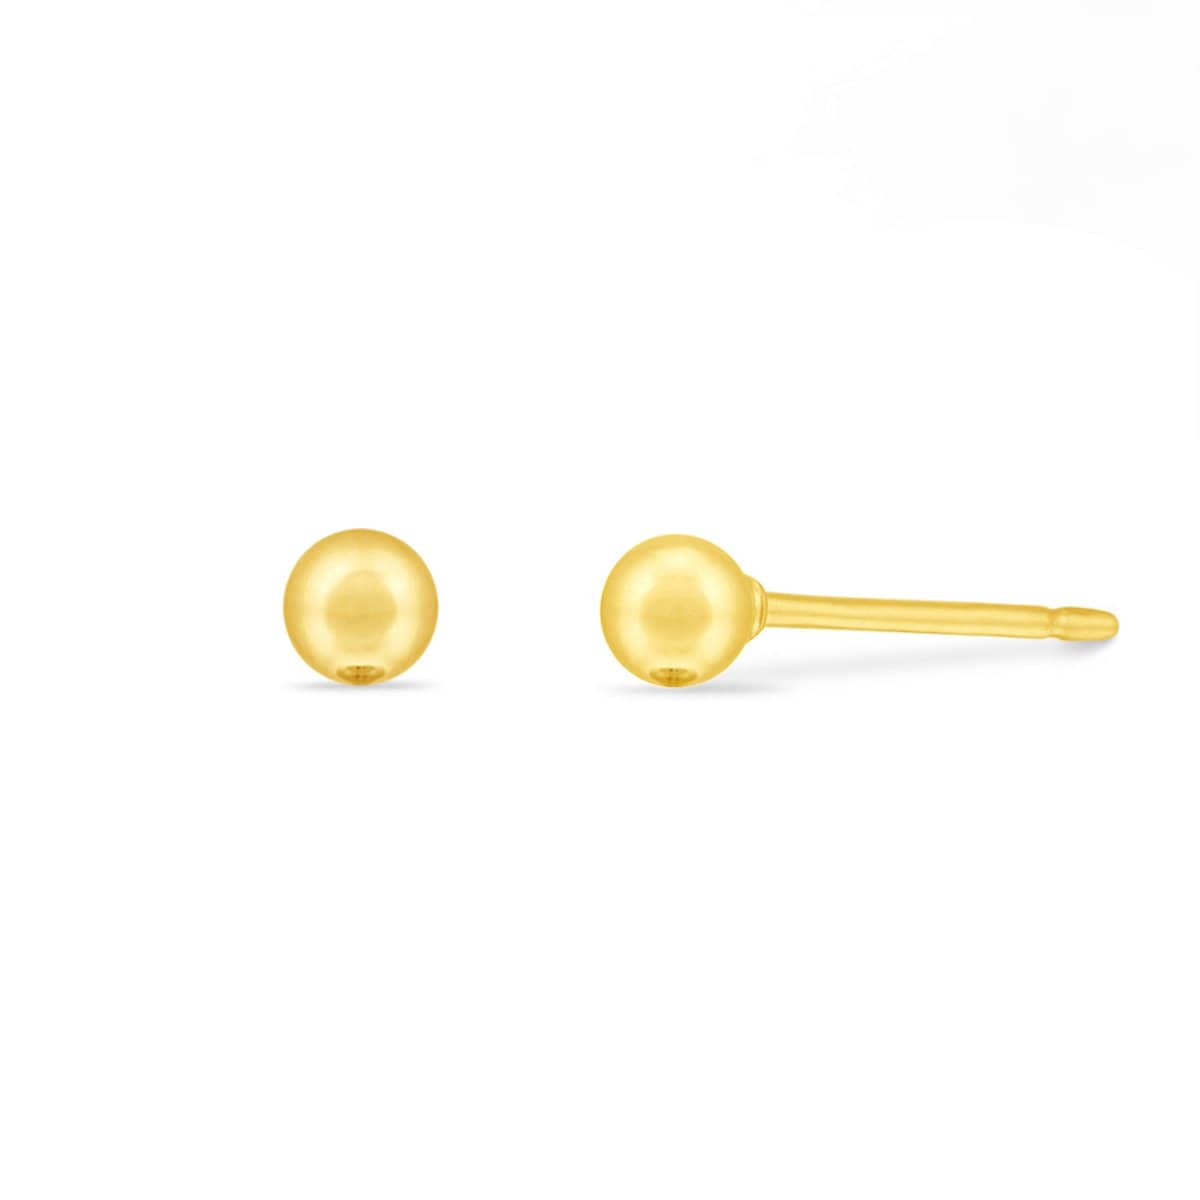 Boma Jewelry Earrings 14K Gold Vermeil Belle Mini Ball Studs